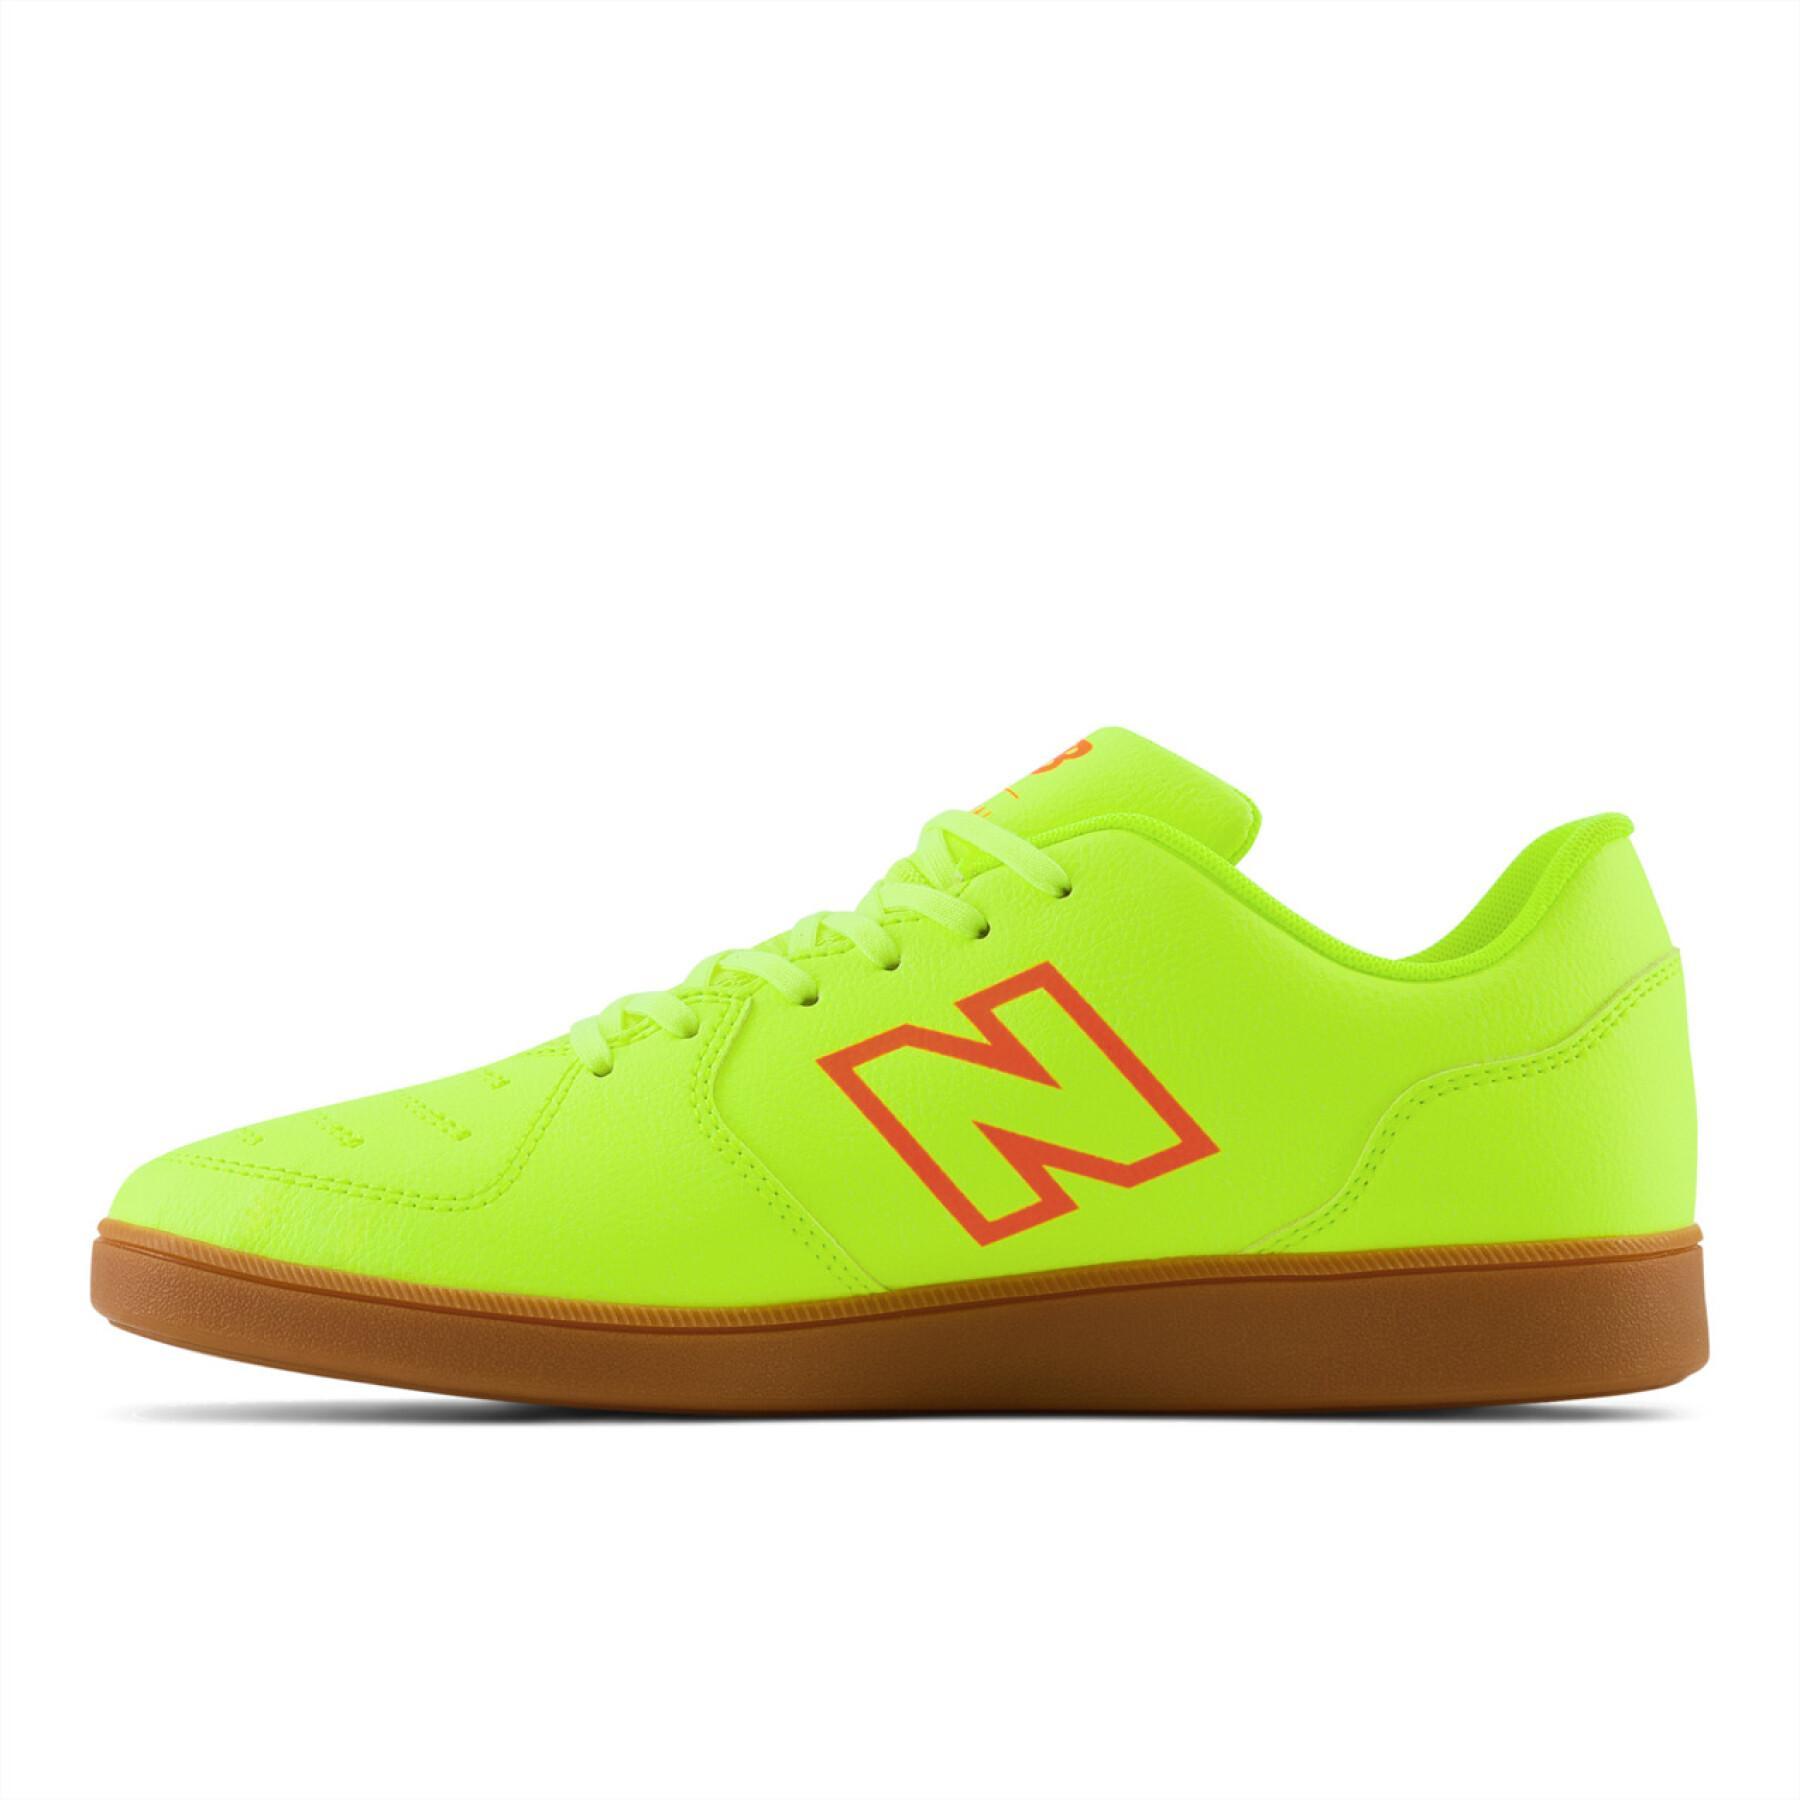 Futsal shoes New Balance Audazo v5+ Control IN